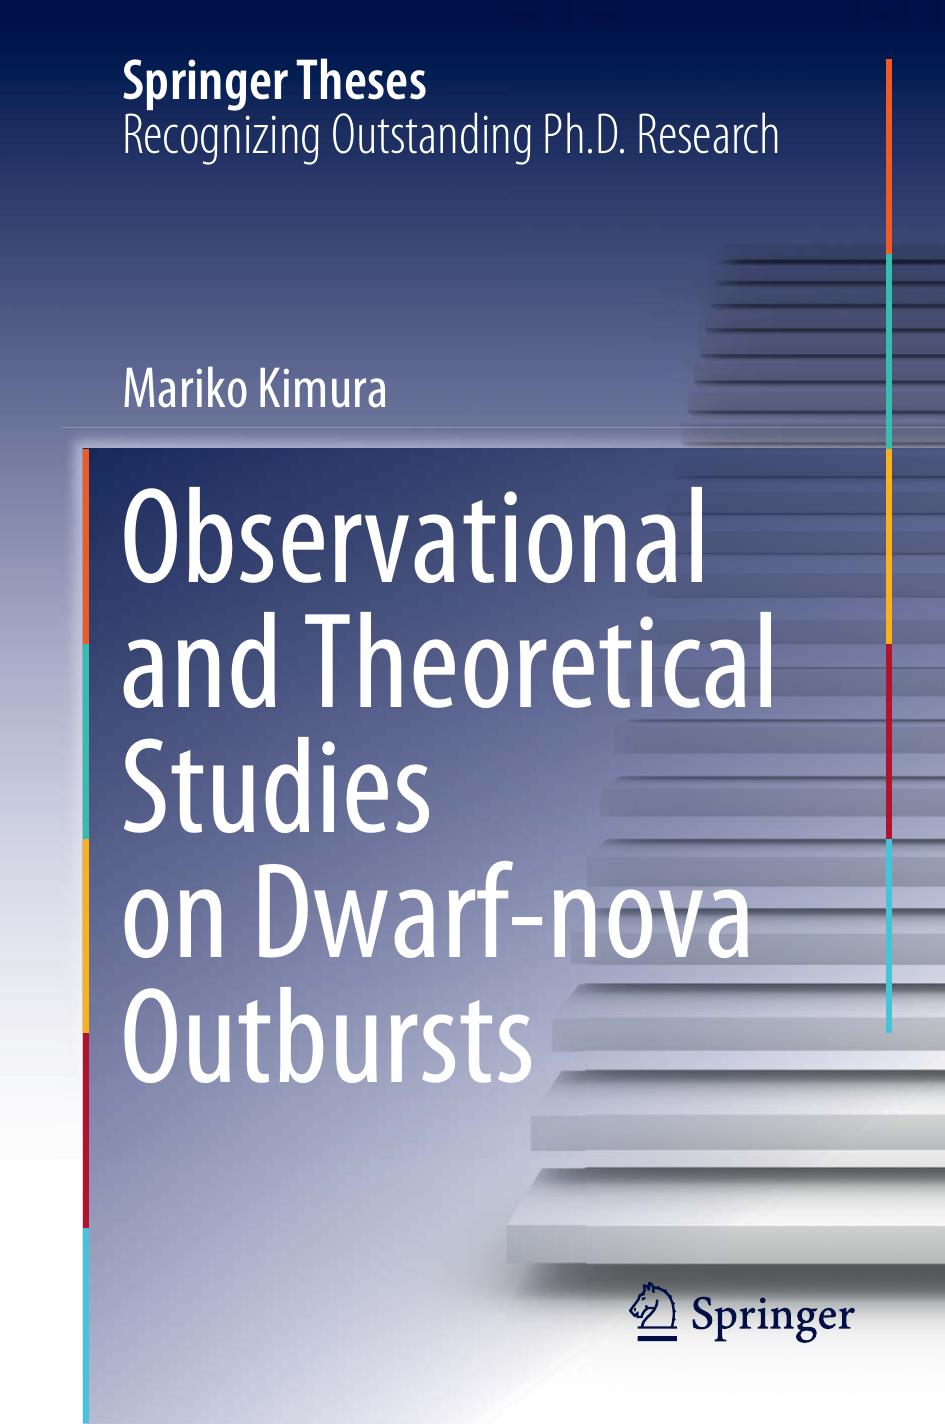 Observational and Theoretical Studies on Dwarf-nova Outbursts by Mariko Kimura